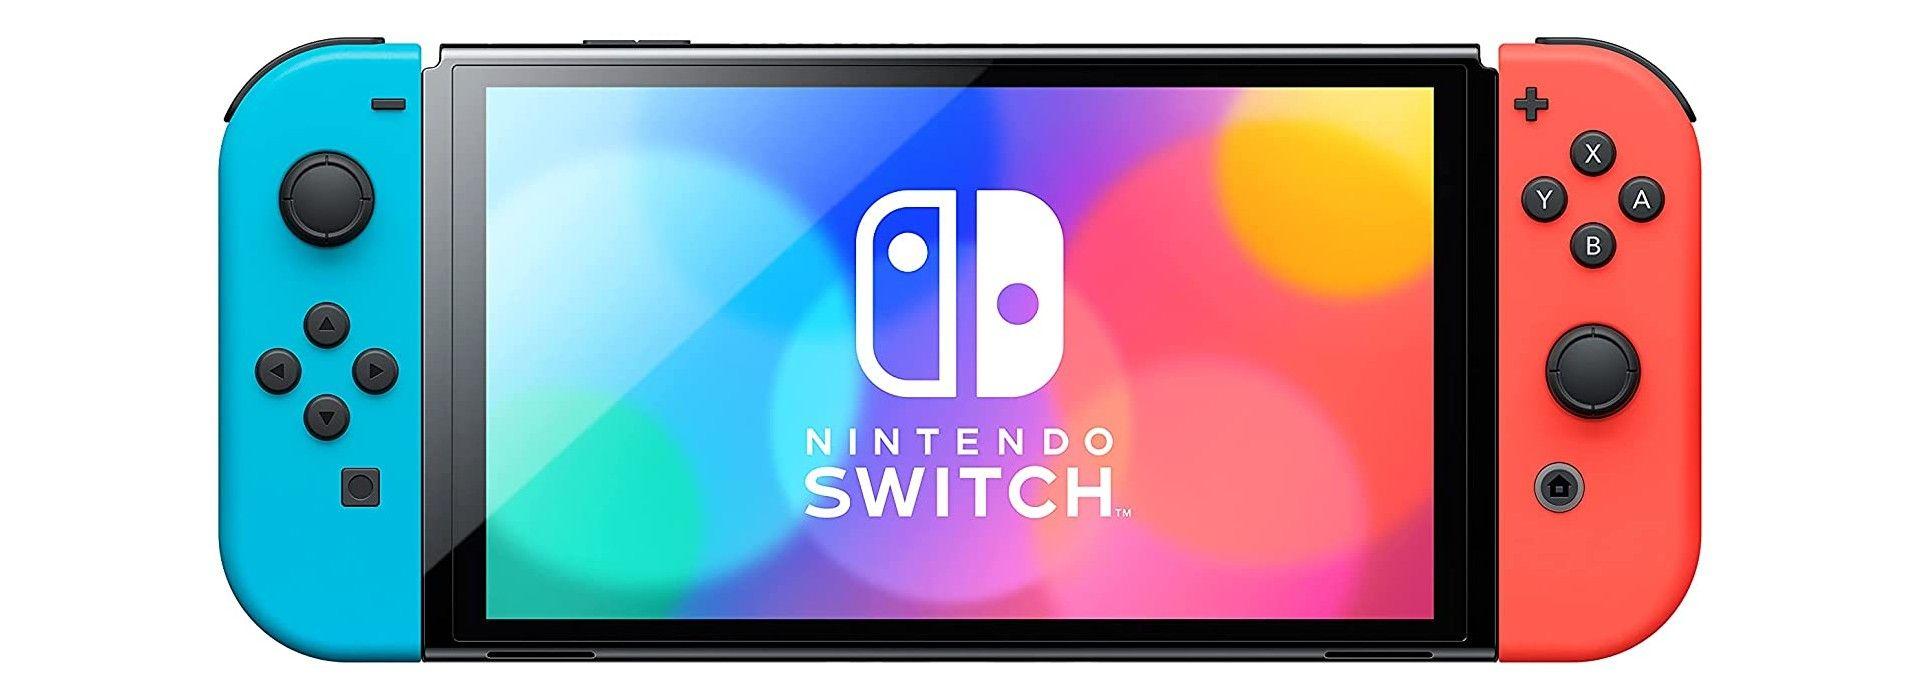 Nintendo Switch OLED - Noir, Rouge fluo, Bleu non image 1 | Rakuten